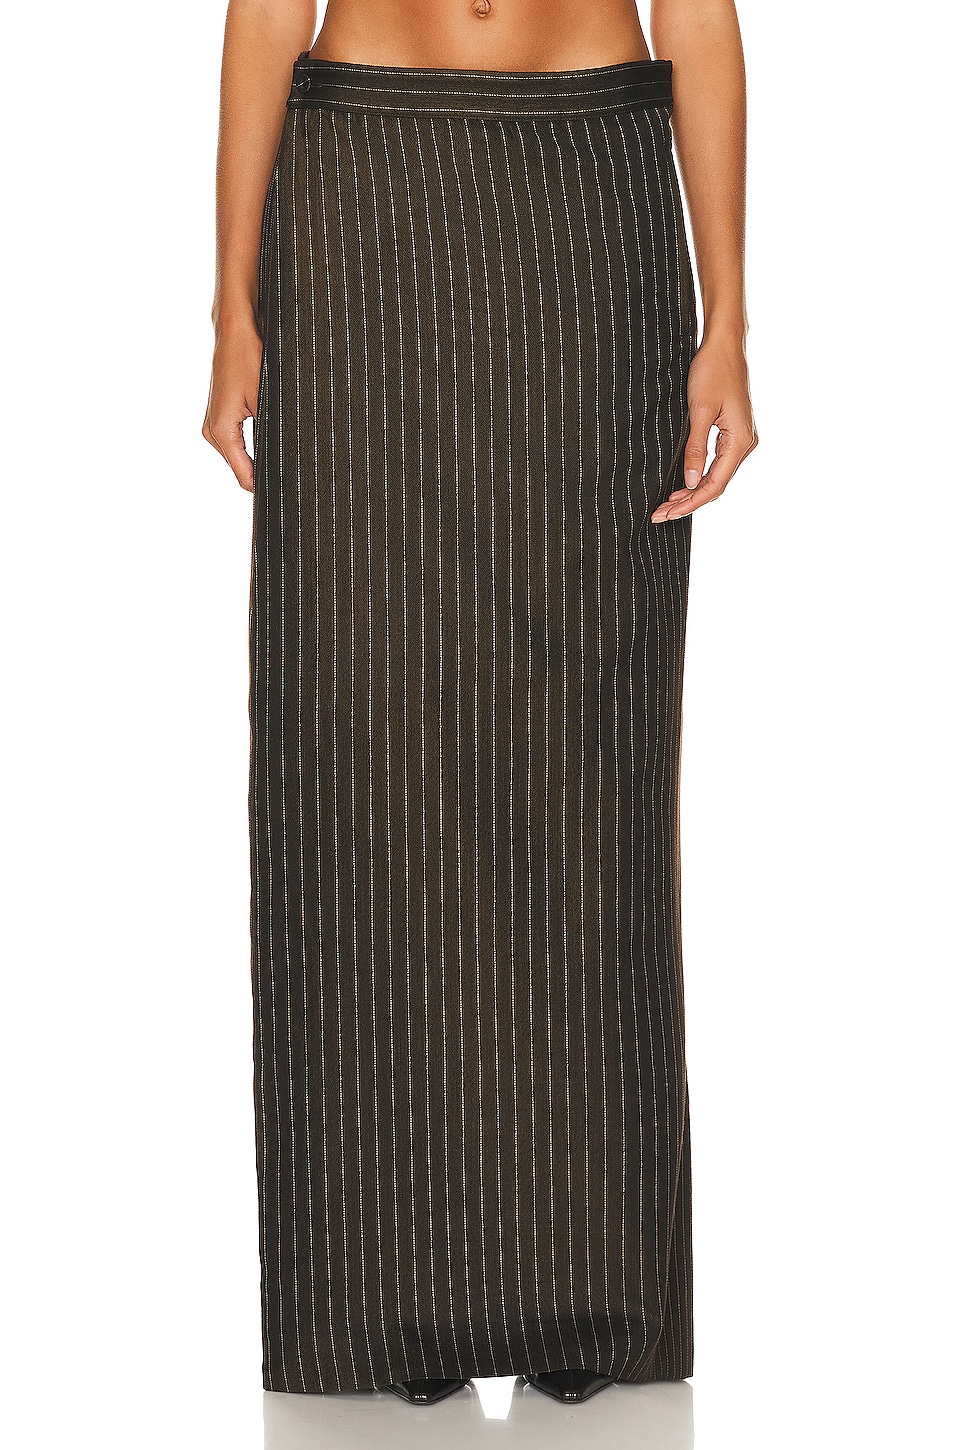 Image 1 of Jean Paul Gaultier Tennis Stripes Low Waist Trouser Skirt in Brown & Ecru